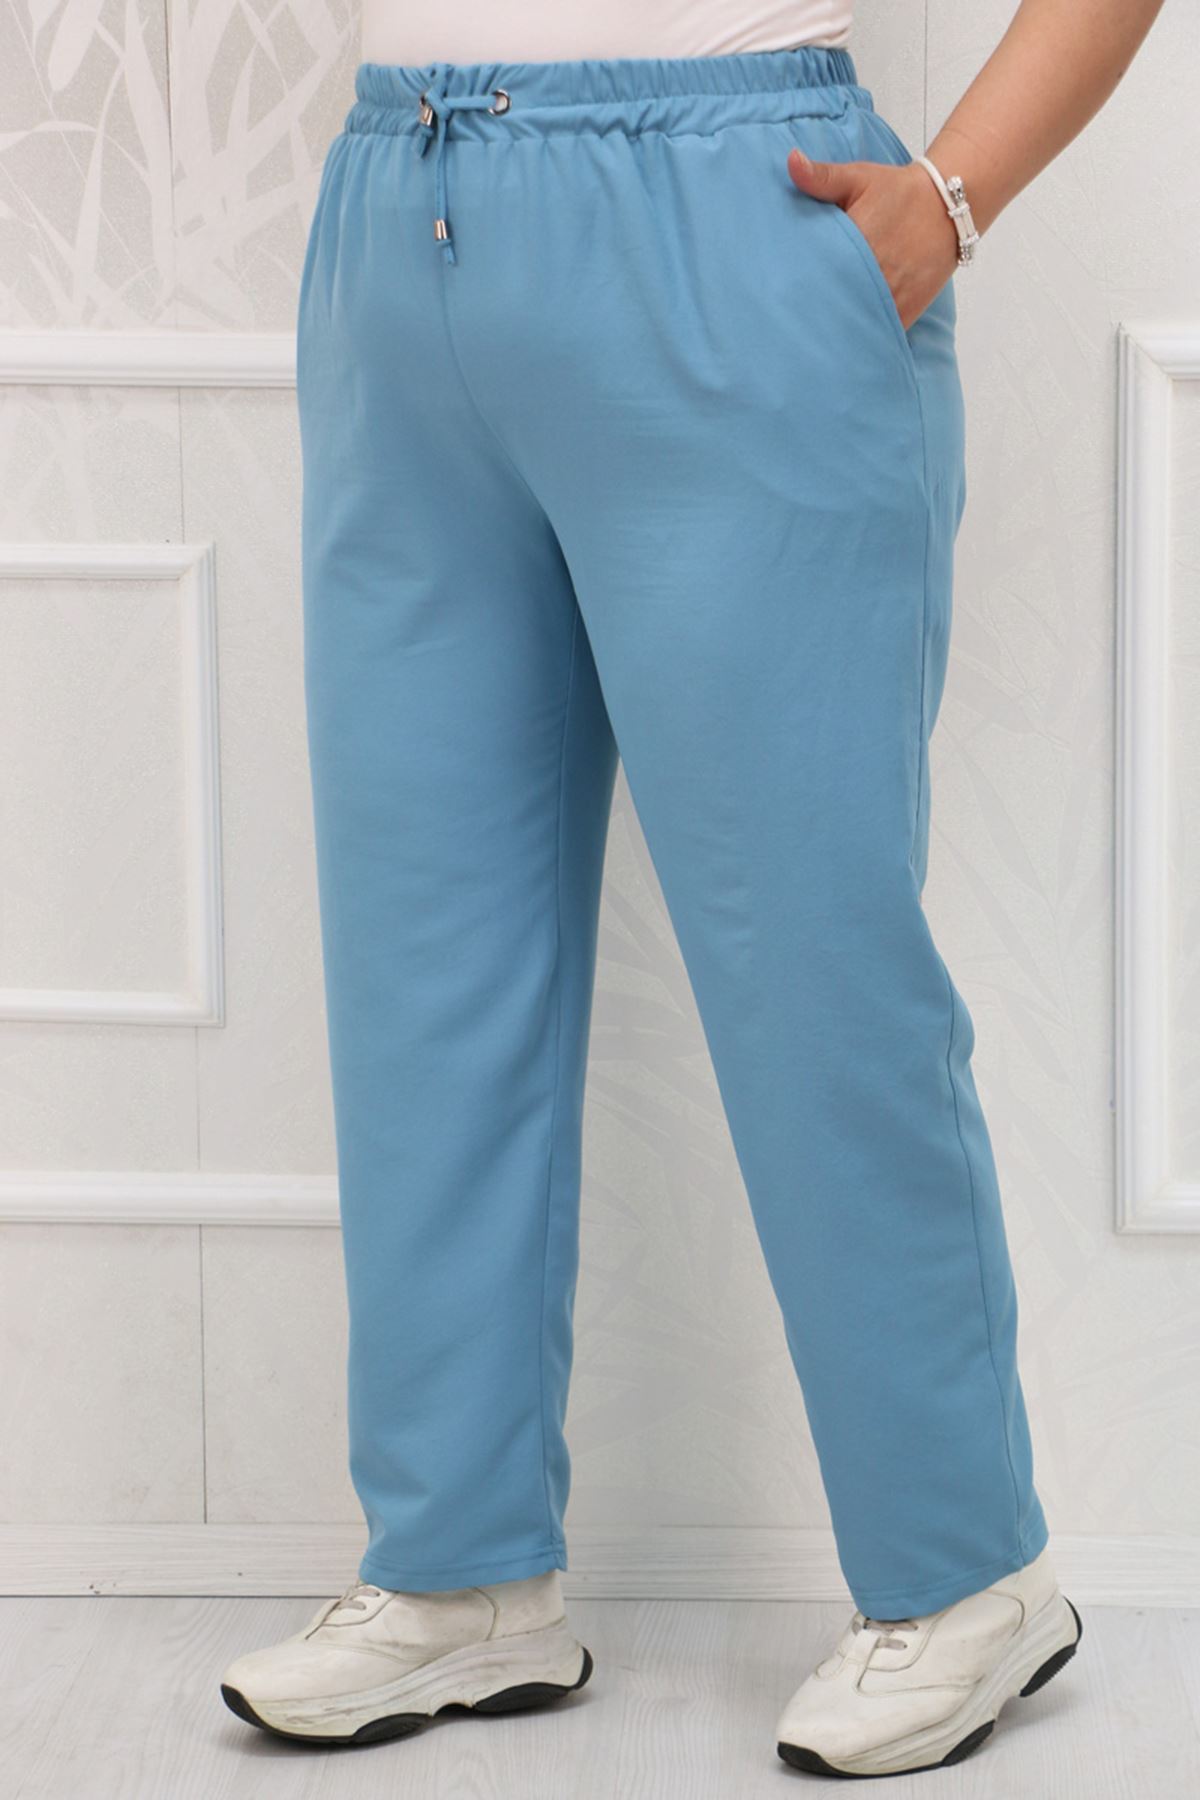 39024 Large Size Star Airobin Slim Leg Pants With Elastic Waist -Baby Blue